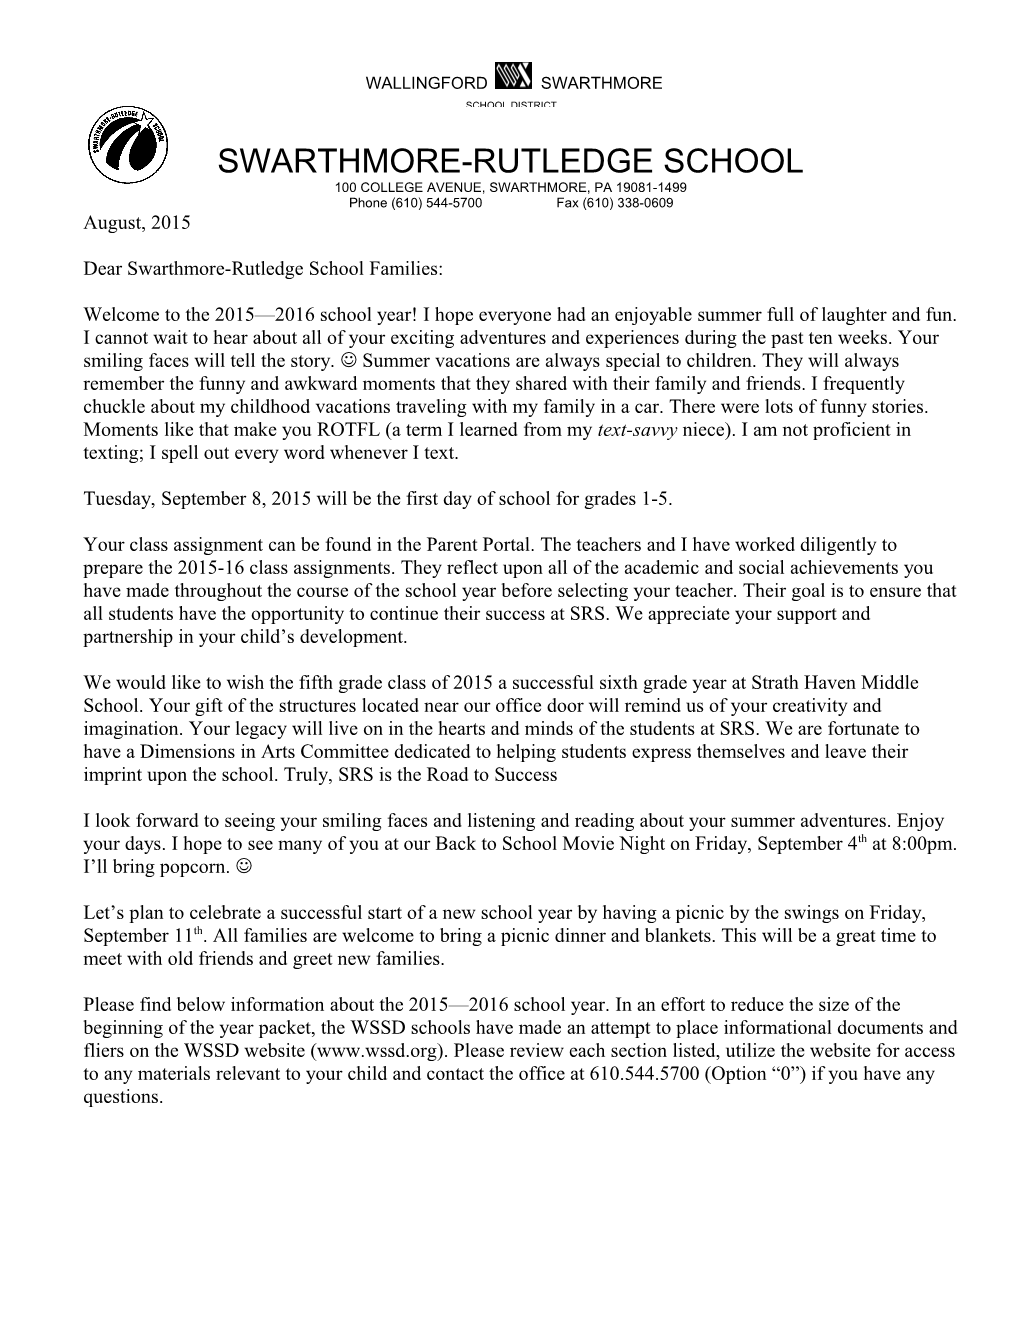 Dear Swarthmore-Rutledge School Families